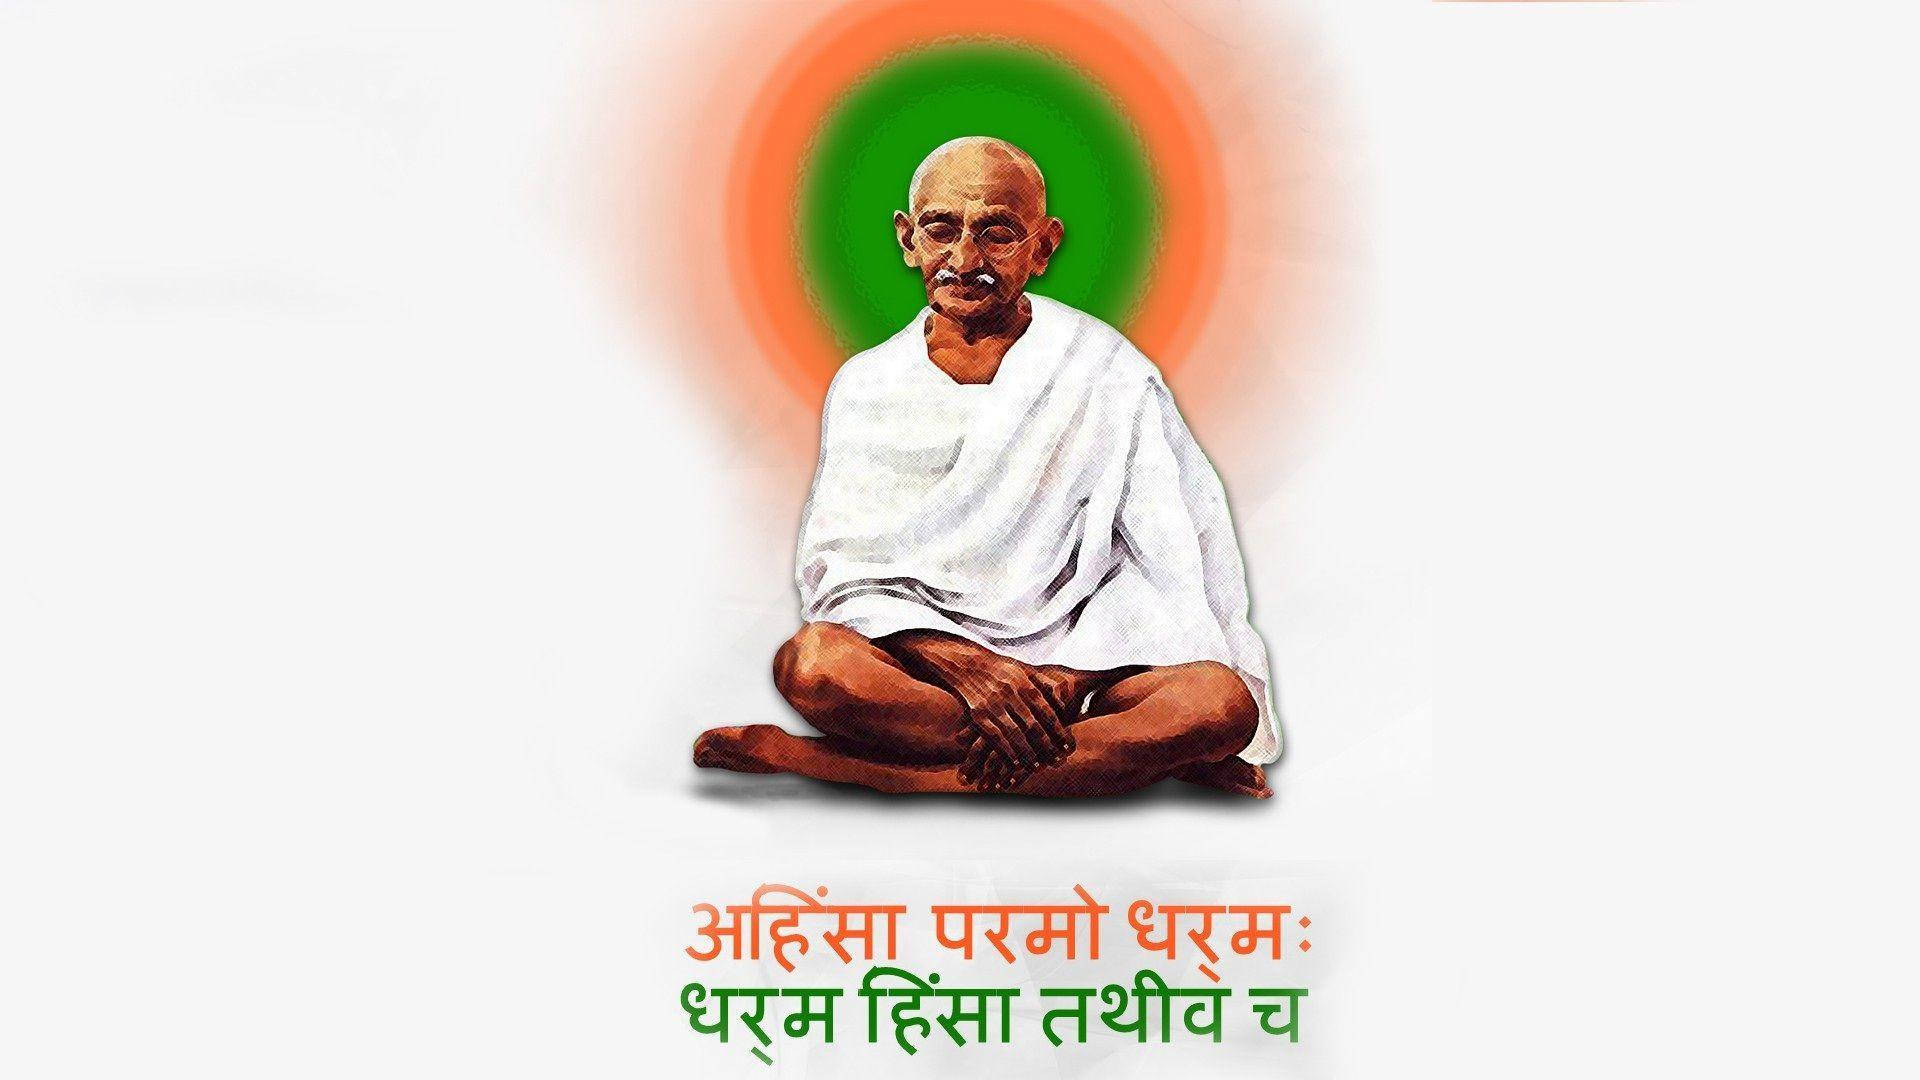 Mahatma Gandhi - The Peaceful Revolutionary Background